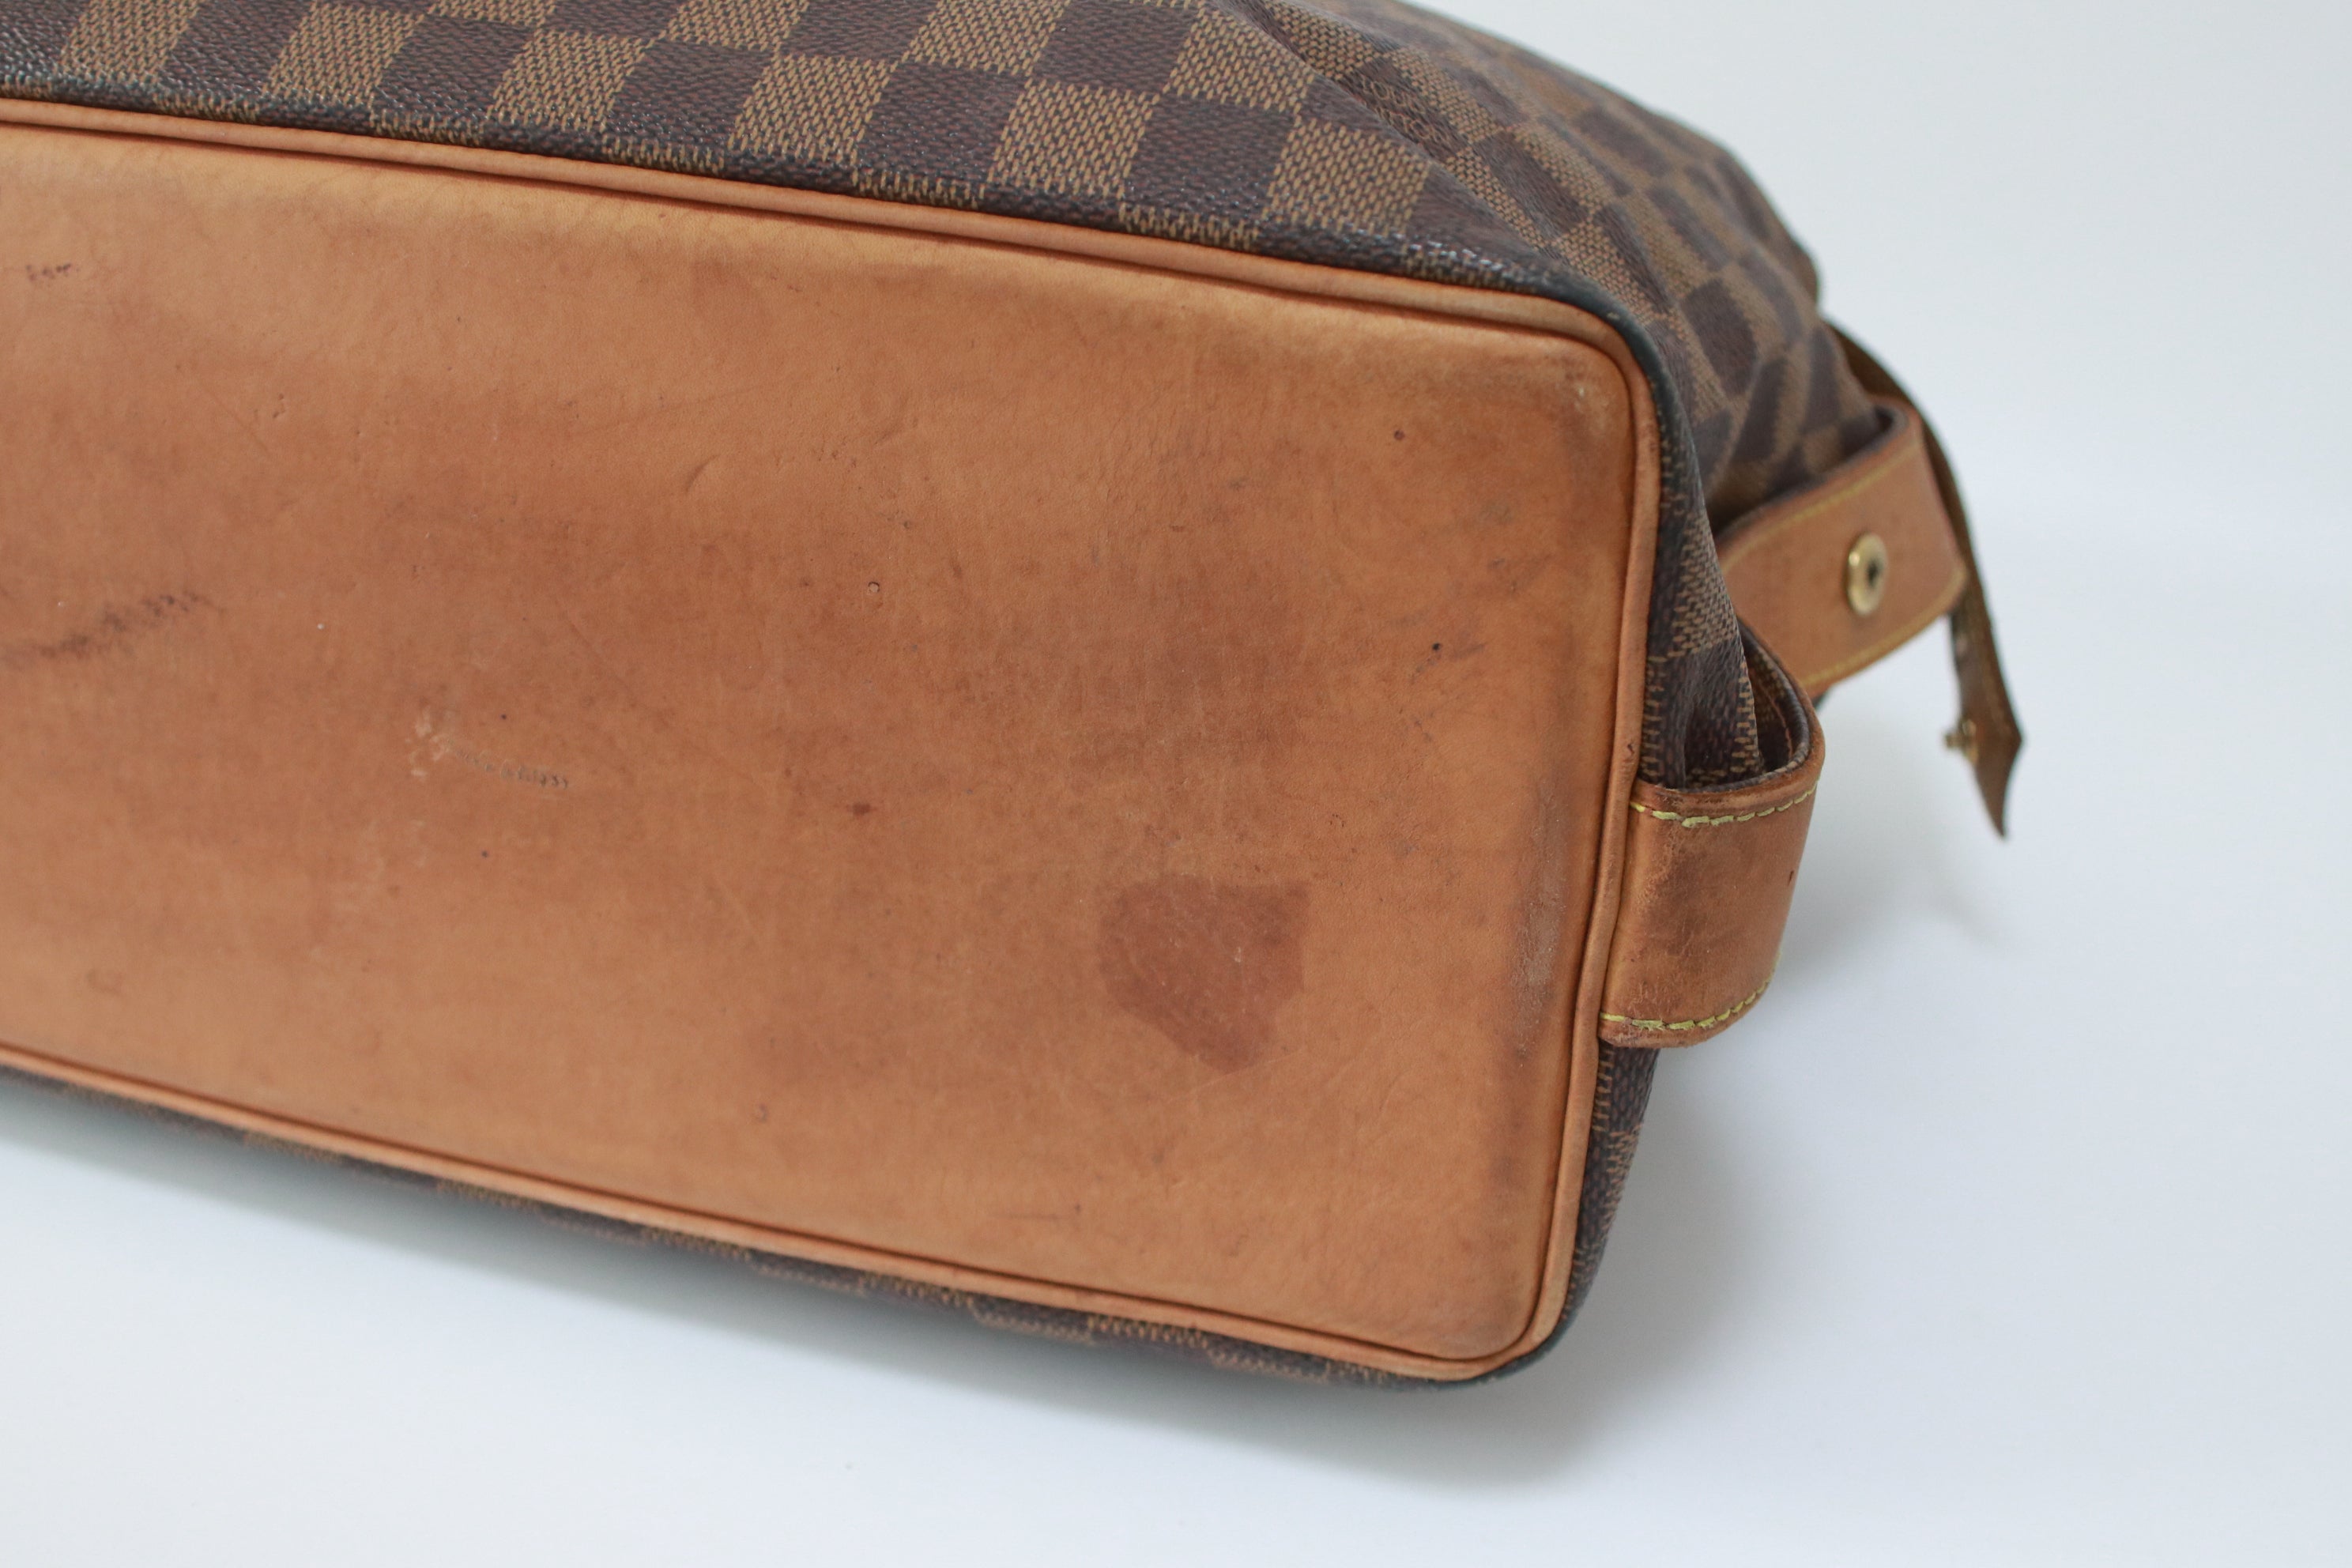 Preloved Louis Vuitton Centenaire Chelsea Shoulder Tote Bag Used (7137)